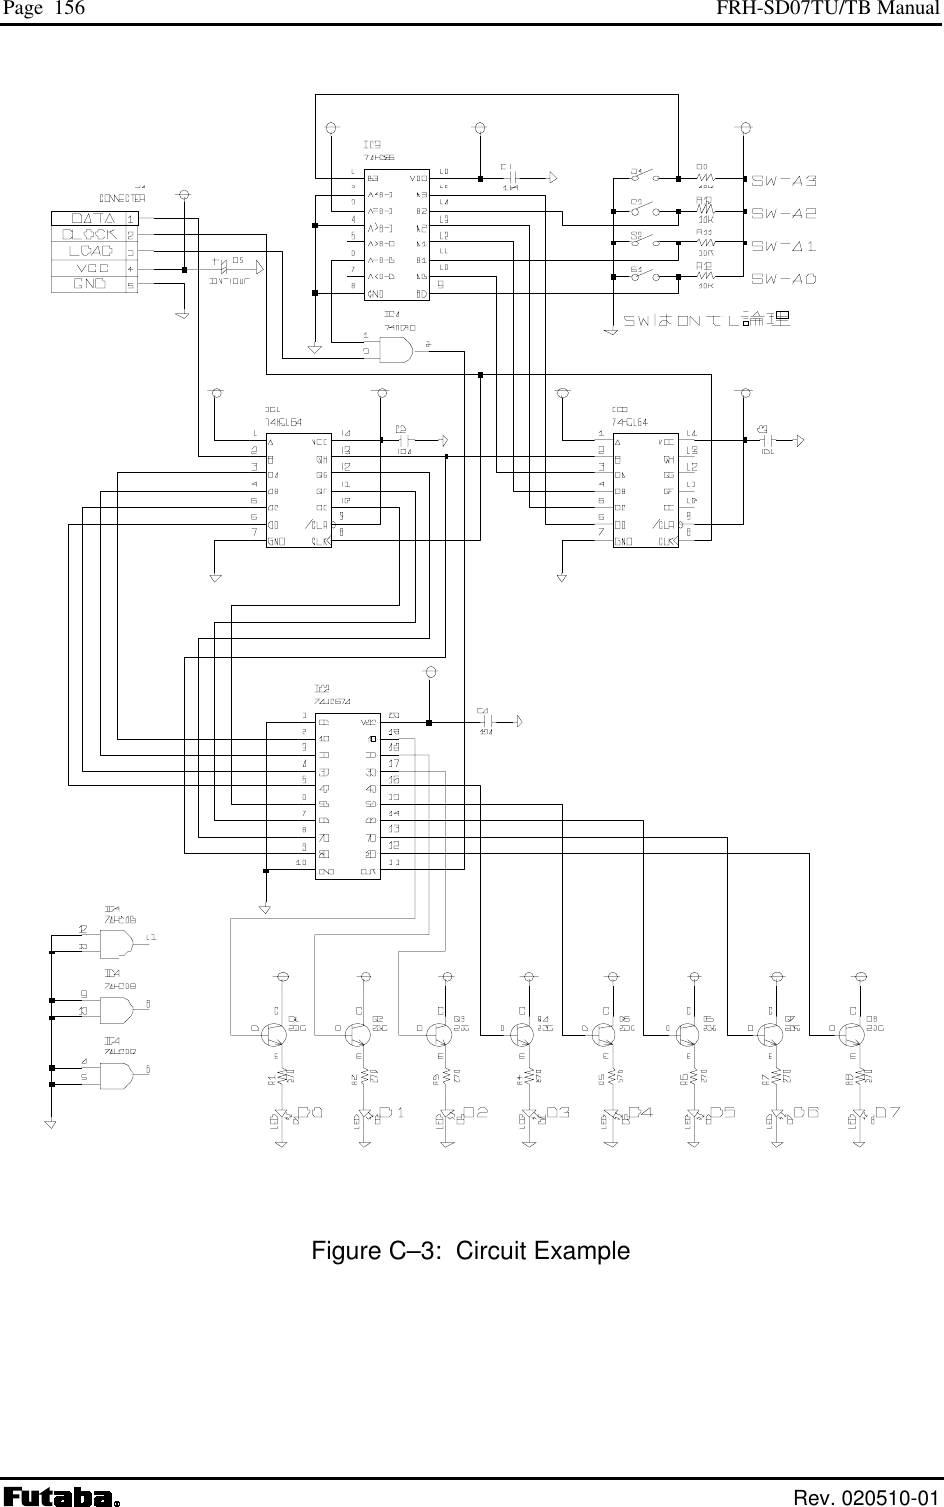 Page  156  FRH-SD07TU/TB Manual  Rev. 020510-01    Figure C–3:  Circuit Example